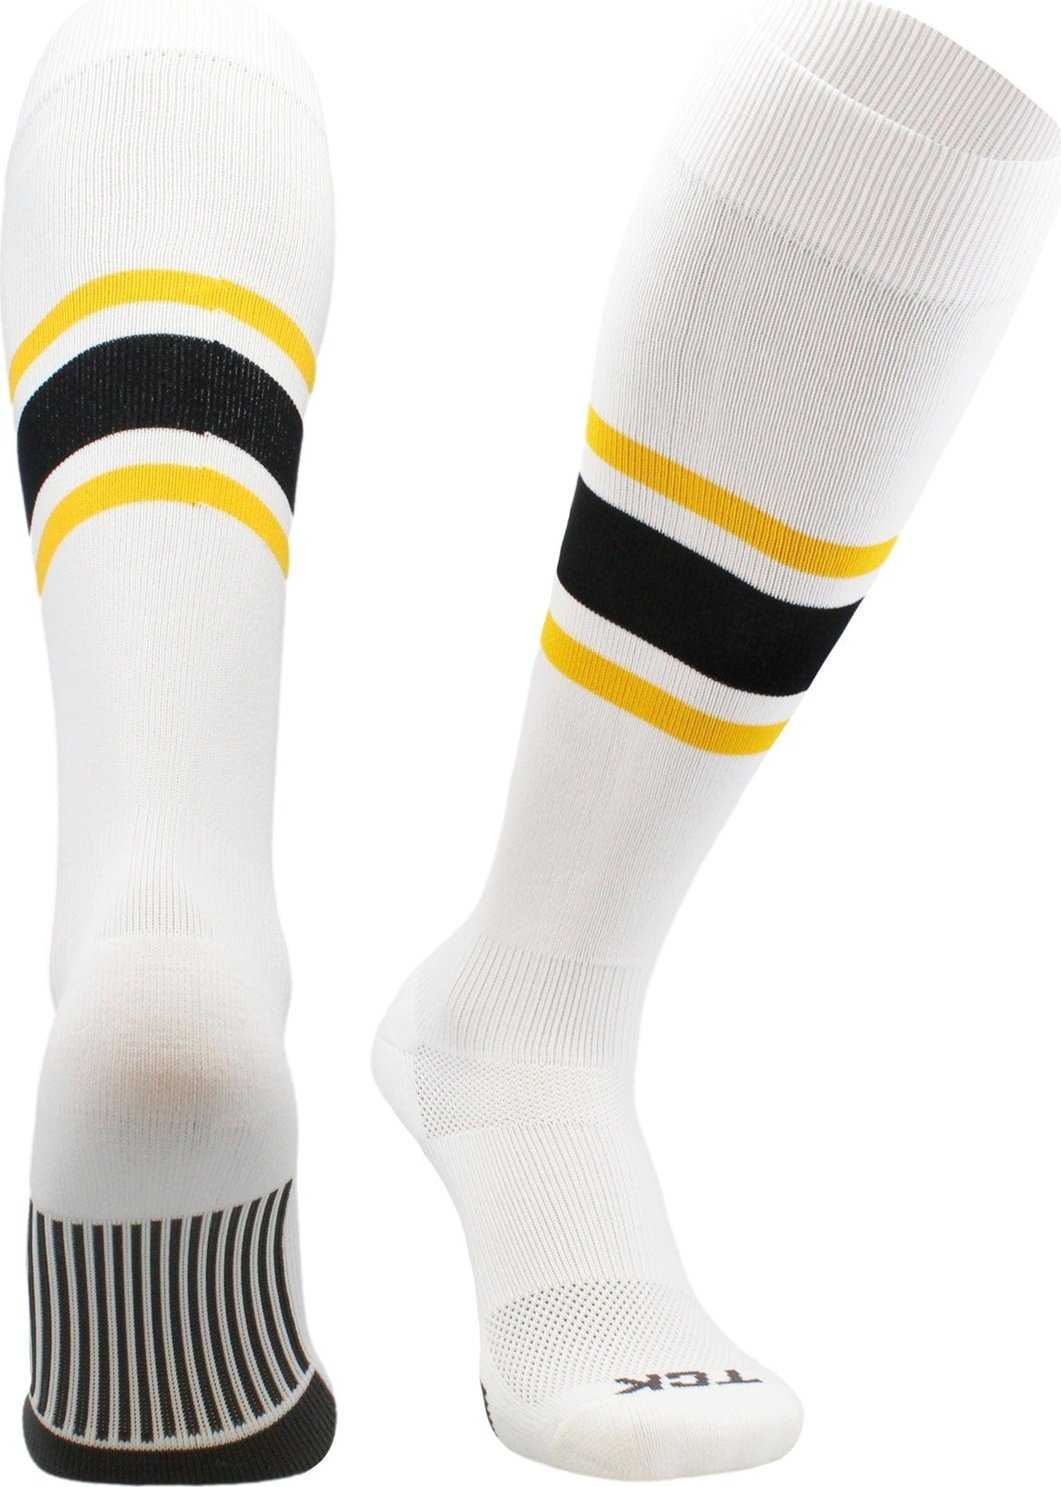 TCK Dugout Knee High Socks - White Gold Black - HIT a Double - 2